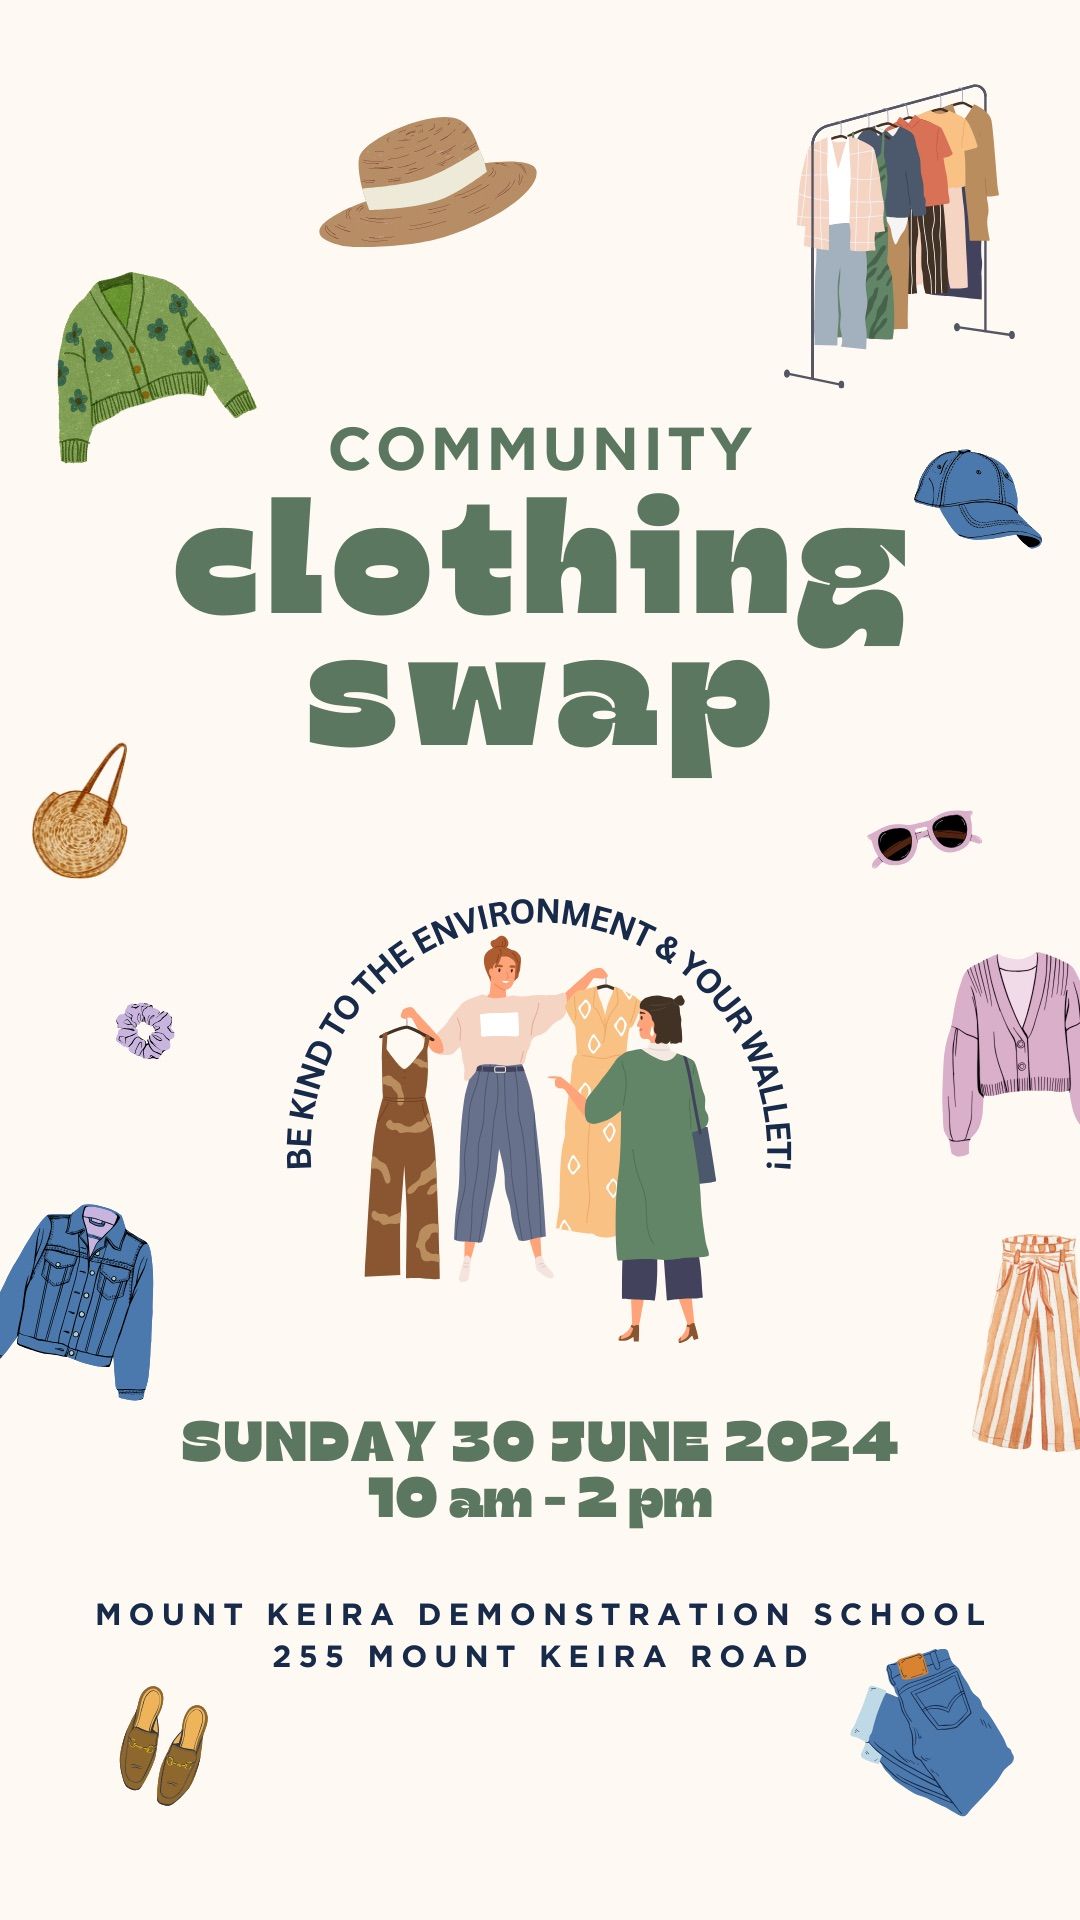 Community CLOTHING SWAP